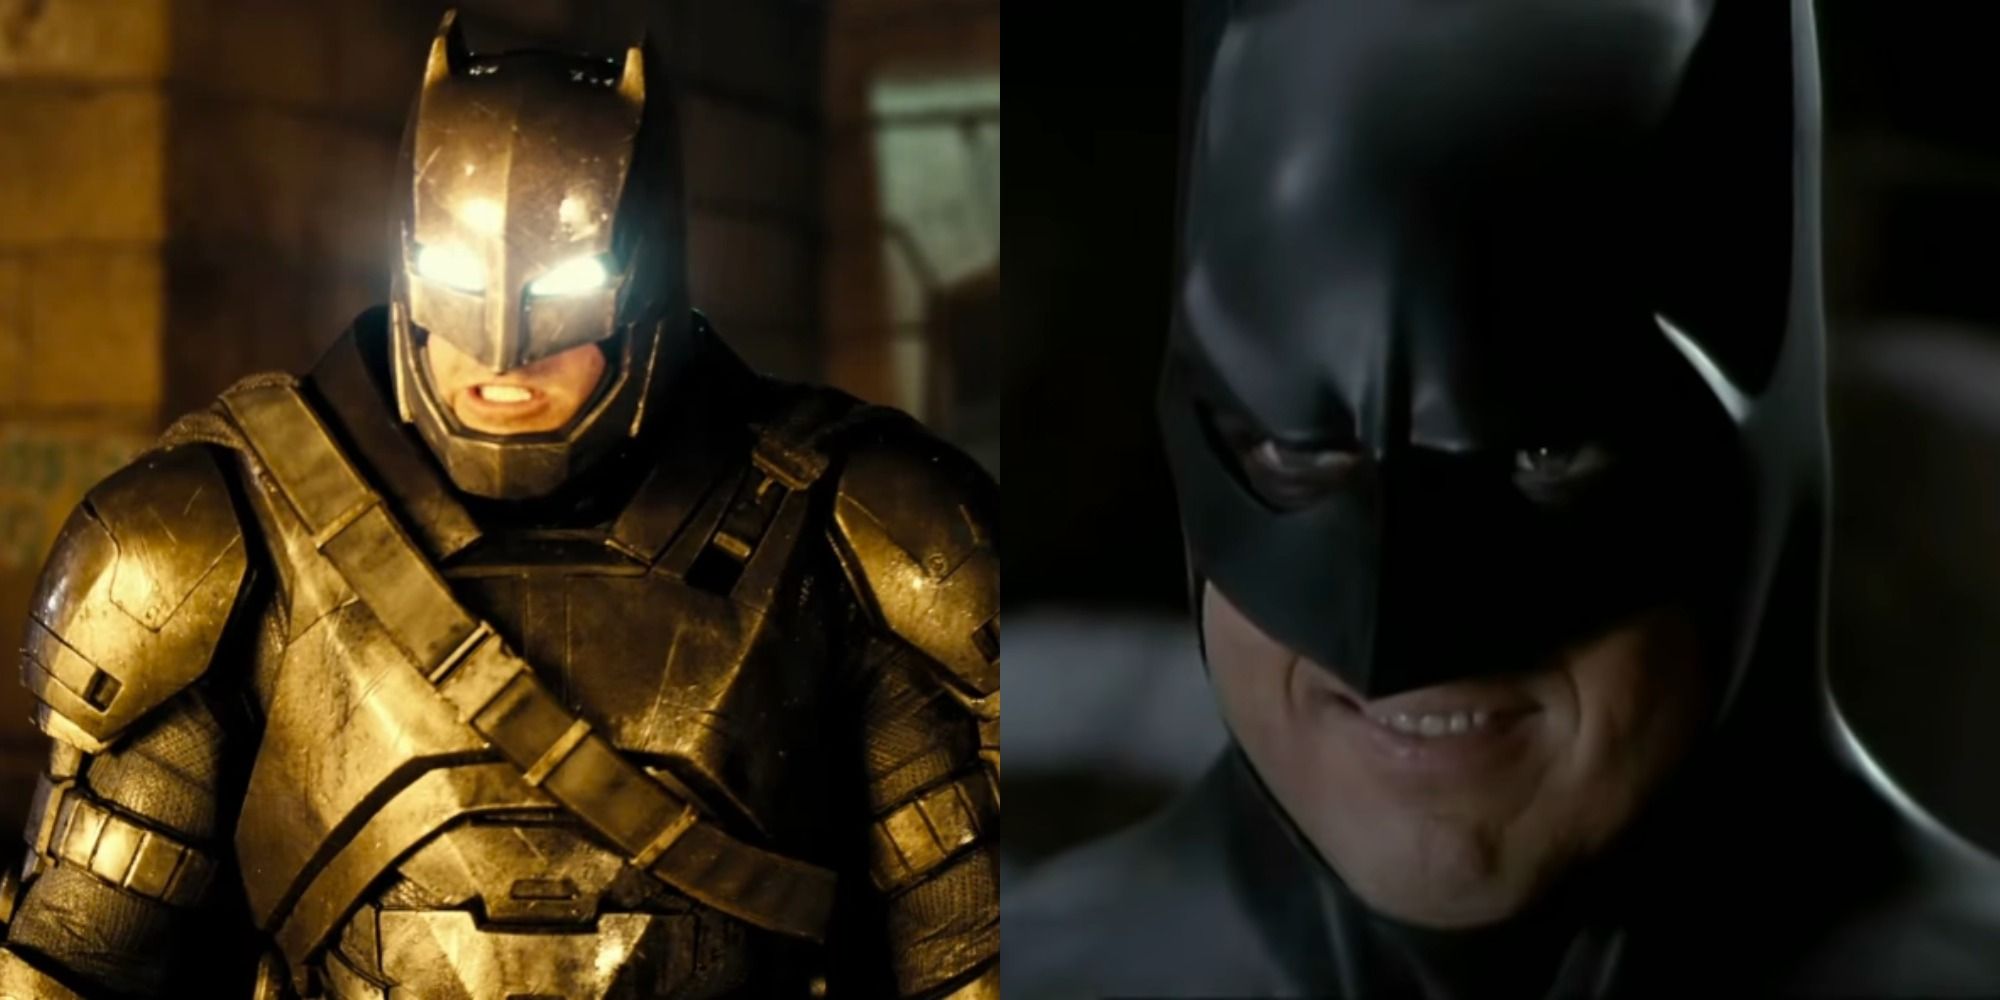 Split image of Ben Affleck's Batman in the armored batsuit and Michael Keaton's Batman smiling creepily